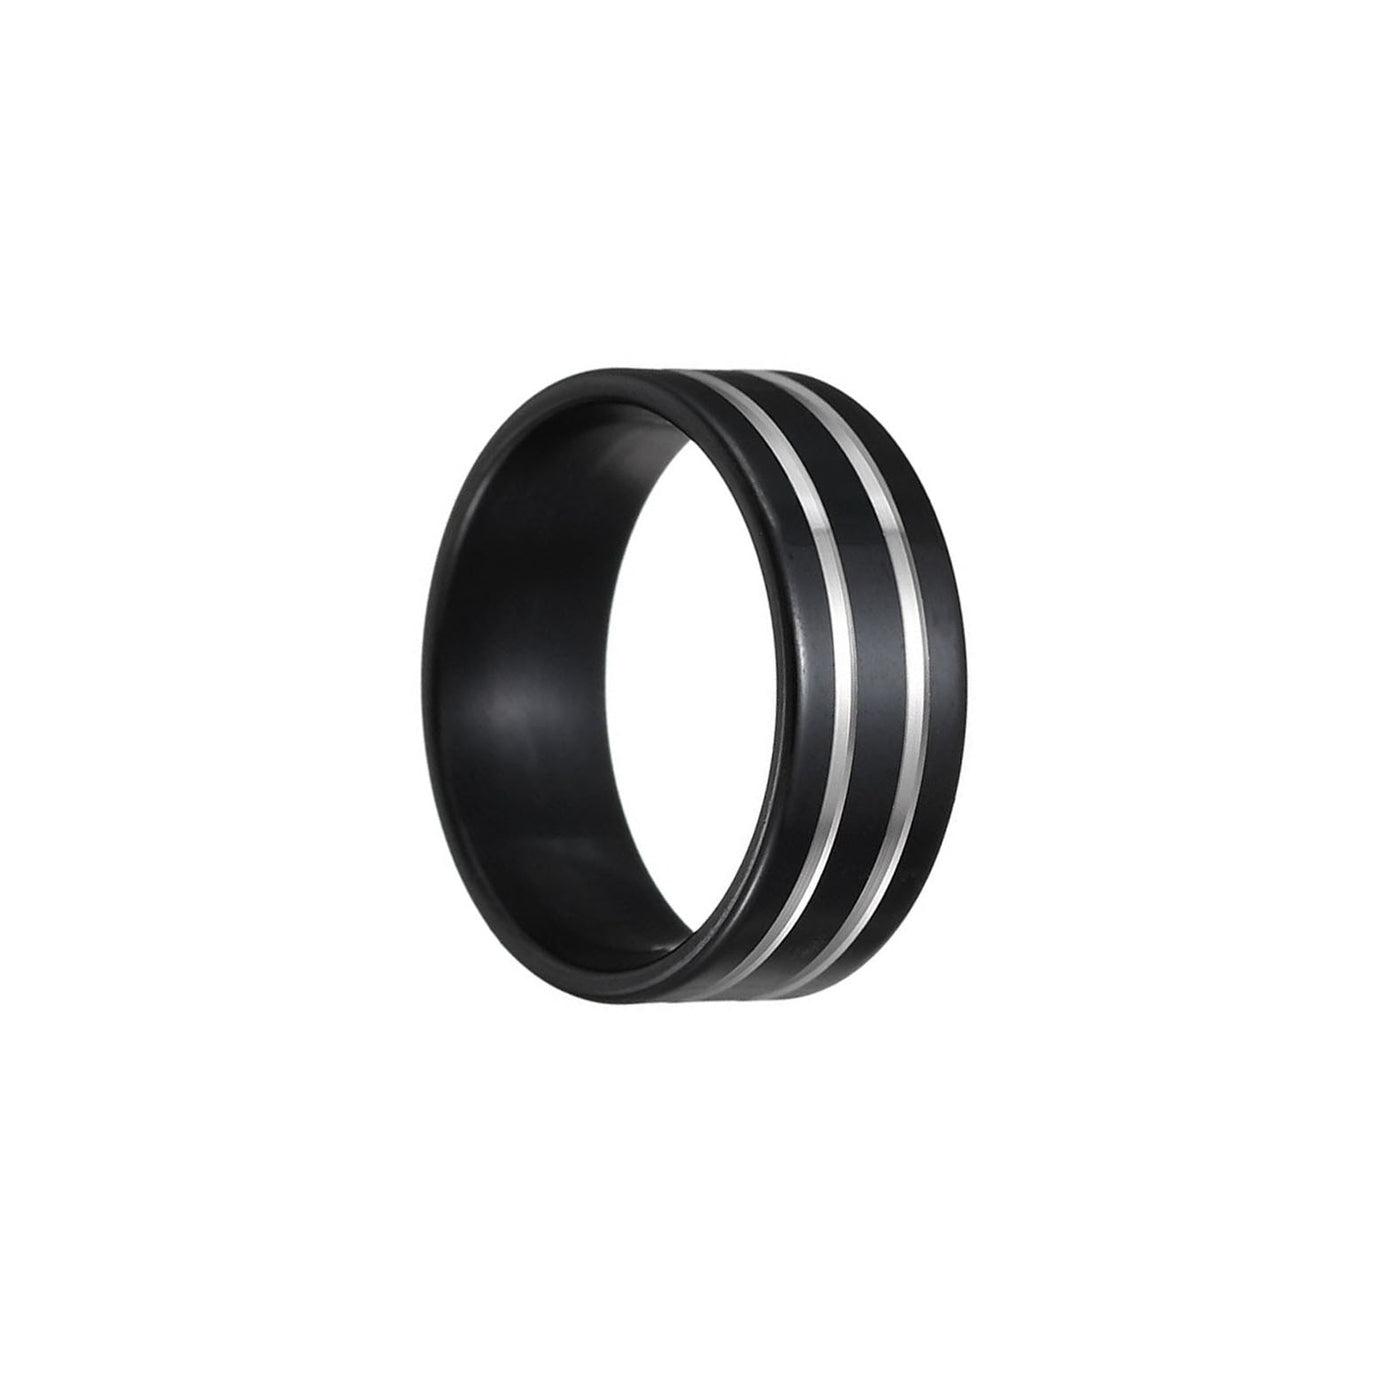 Black striped steel ring 8mm